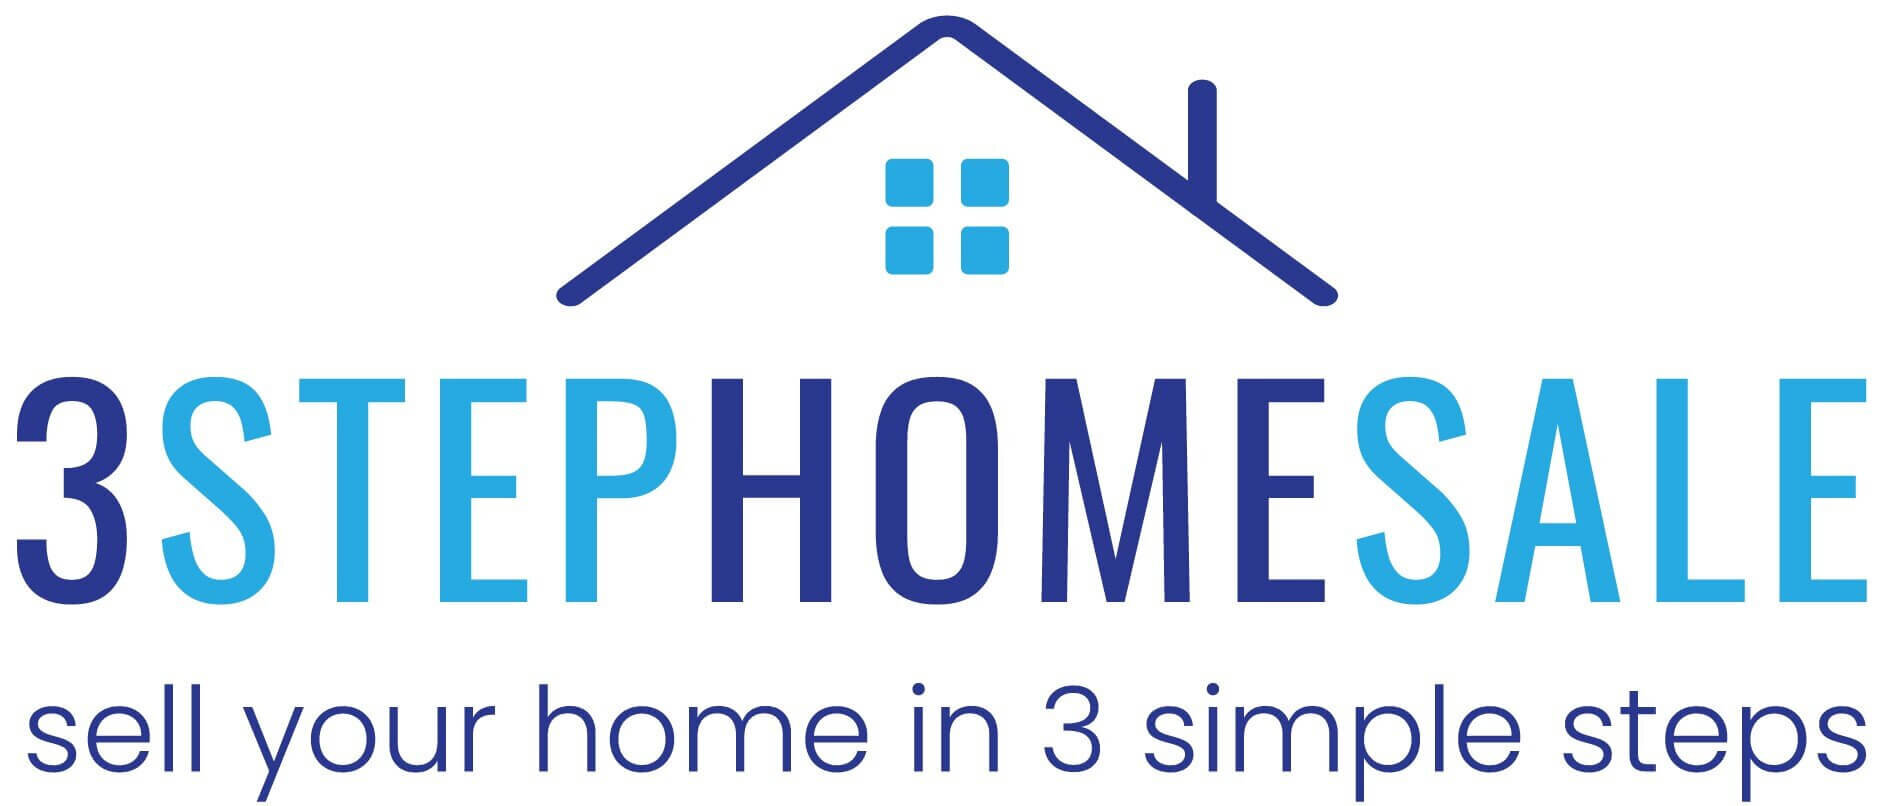 3 Step Home Sale logo